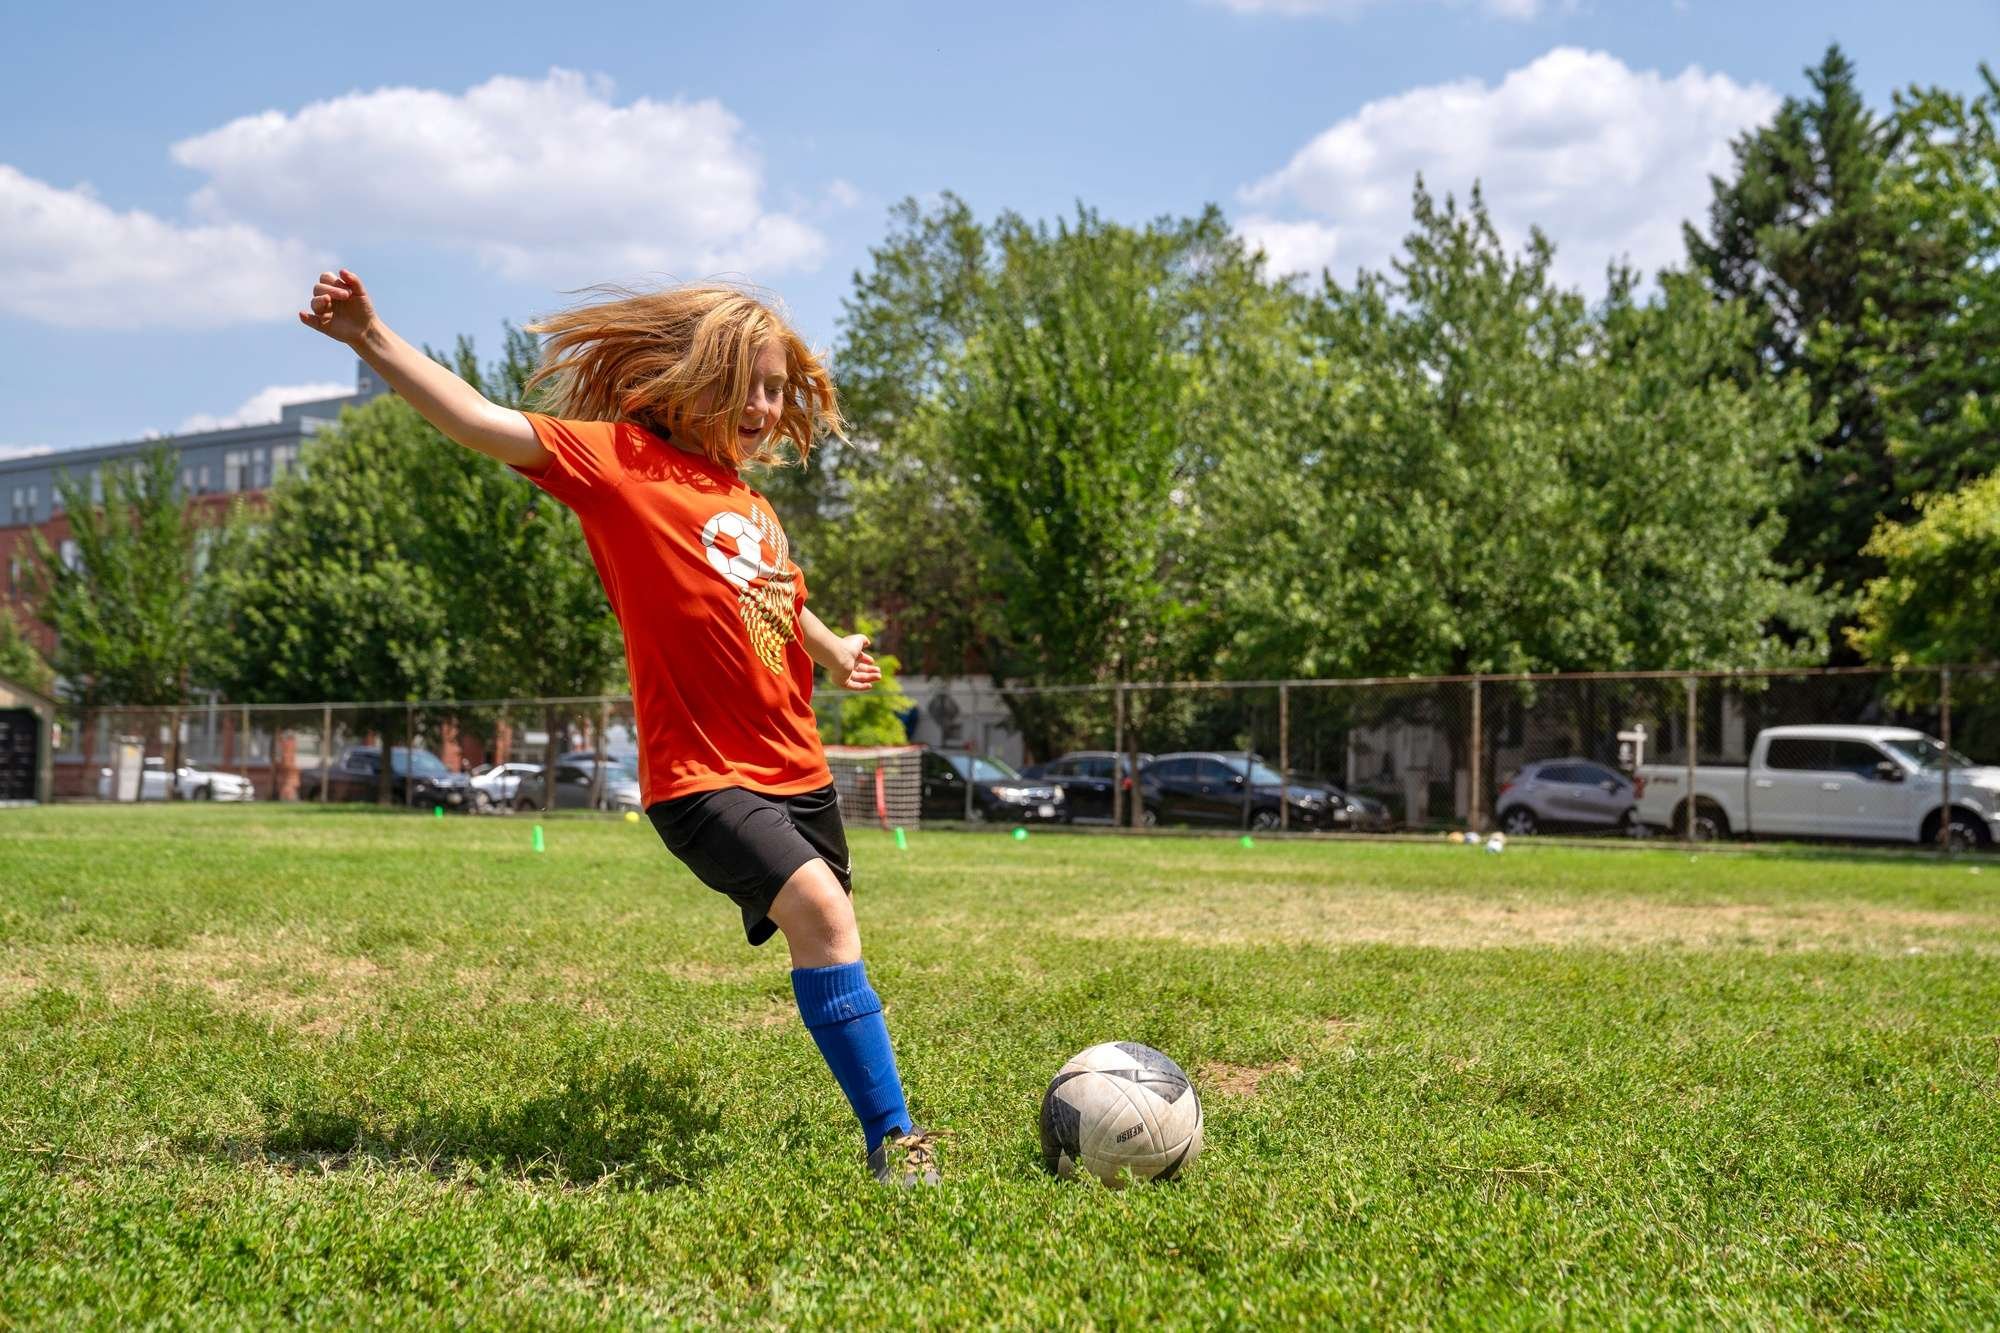 Dc-way-soccer-club-for-kids-in-washington-dc-summer-camp-at-tyler-elementary-school- 0029.jpg